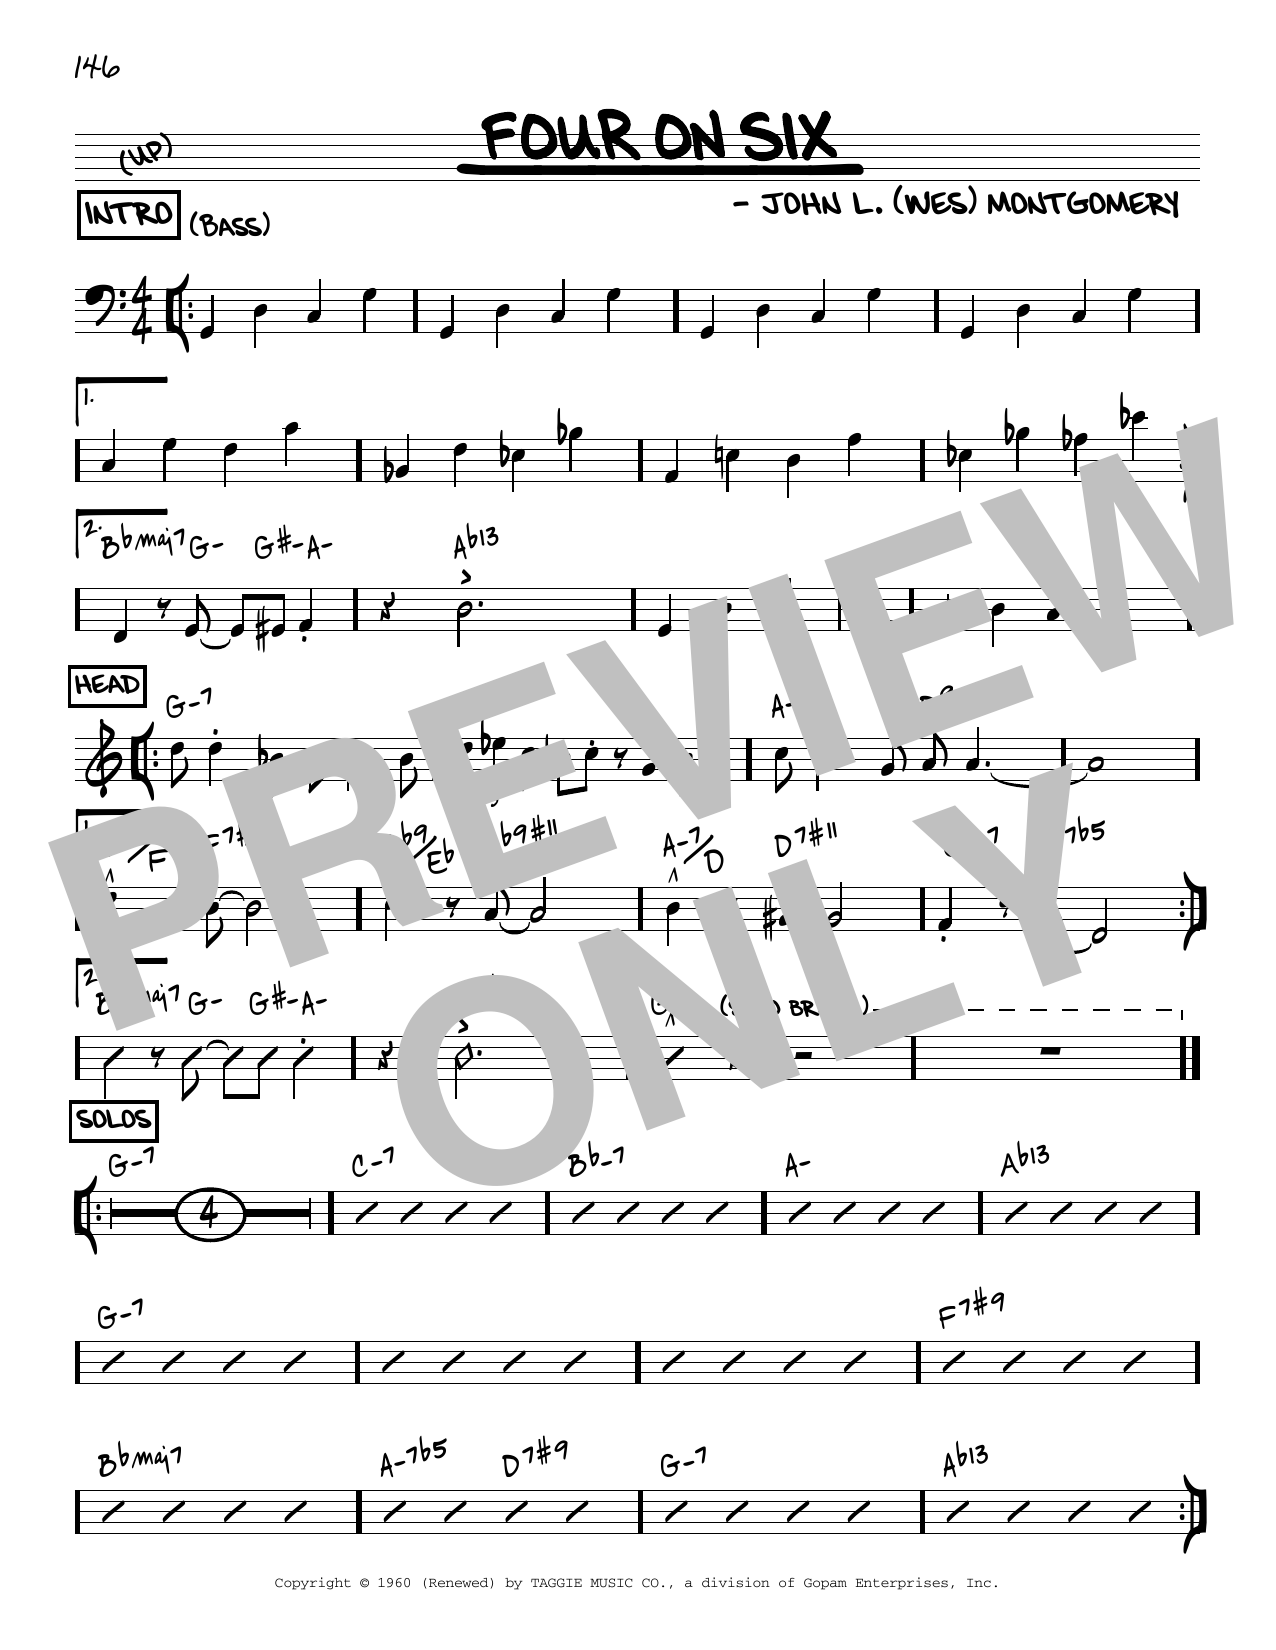 Download Wes Montgomery Four On Six [Reharmonized version] (arr Sheet Music